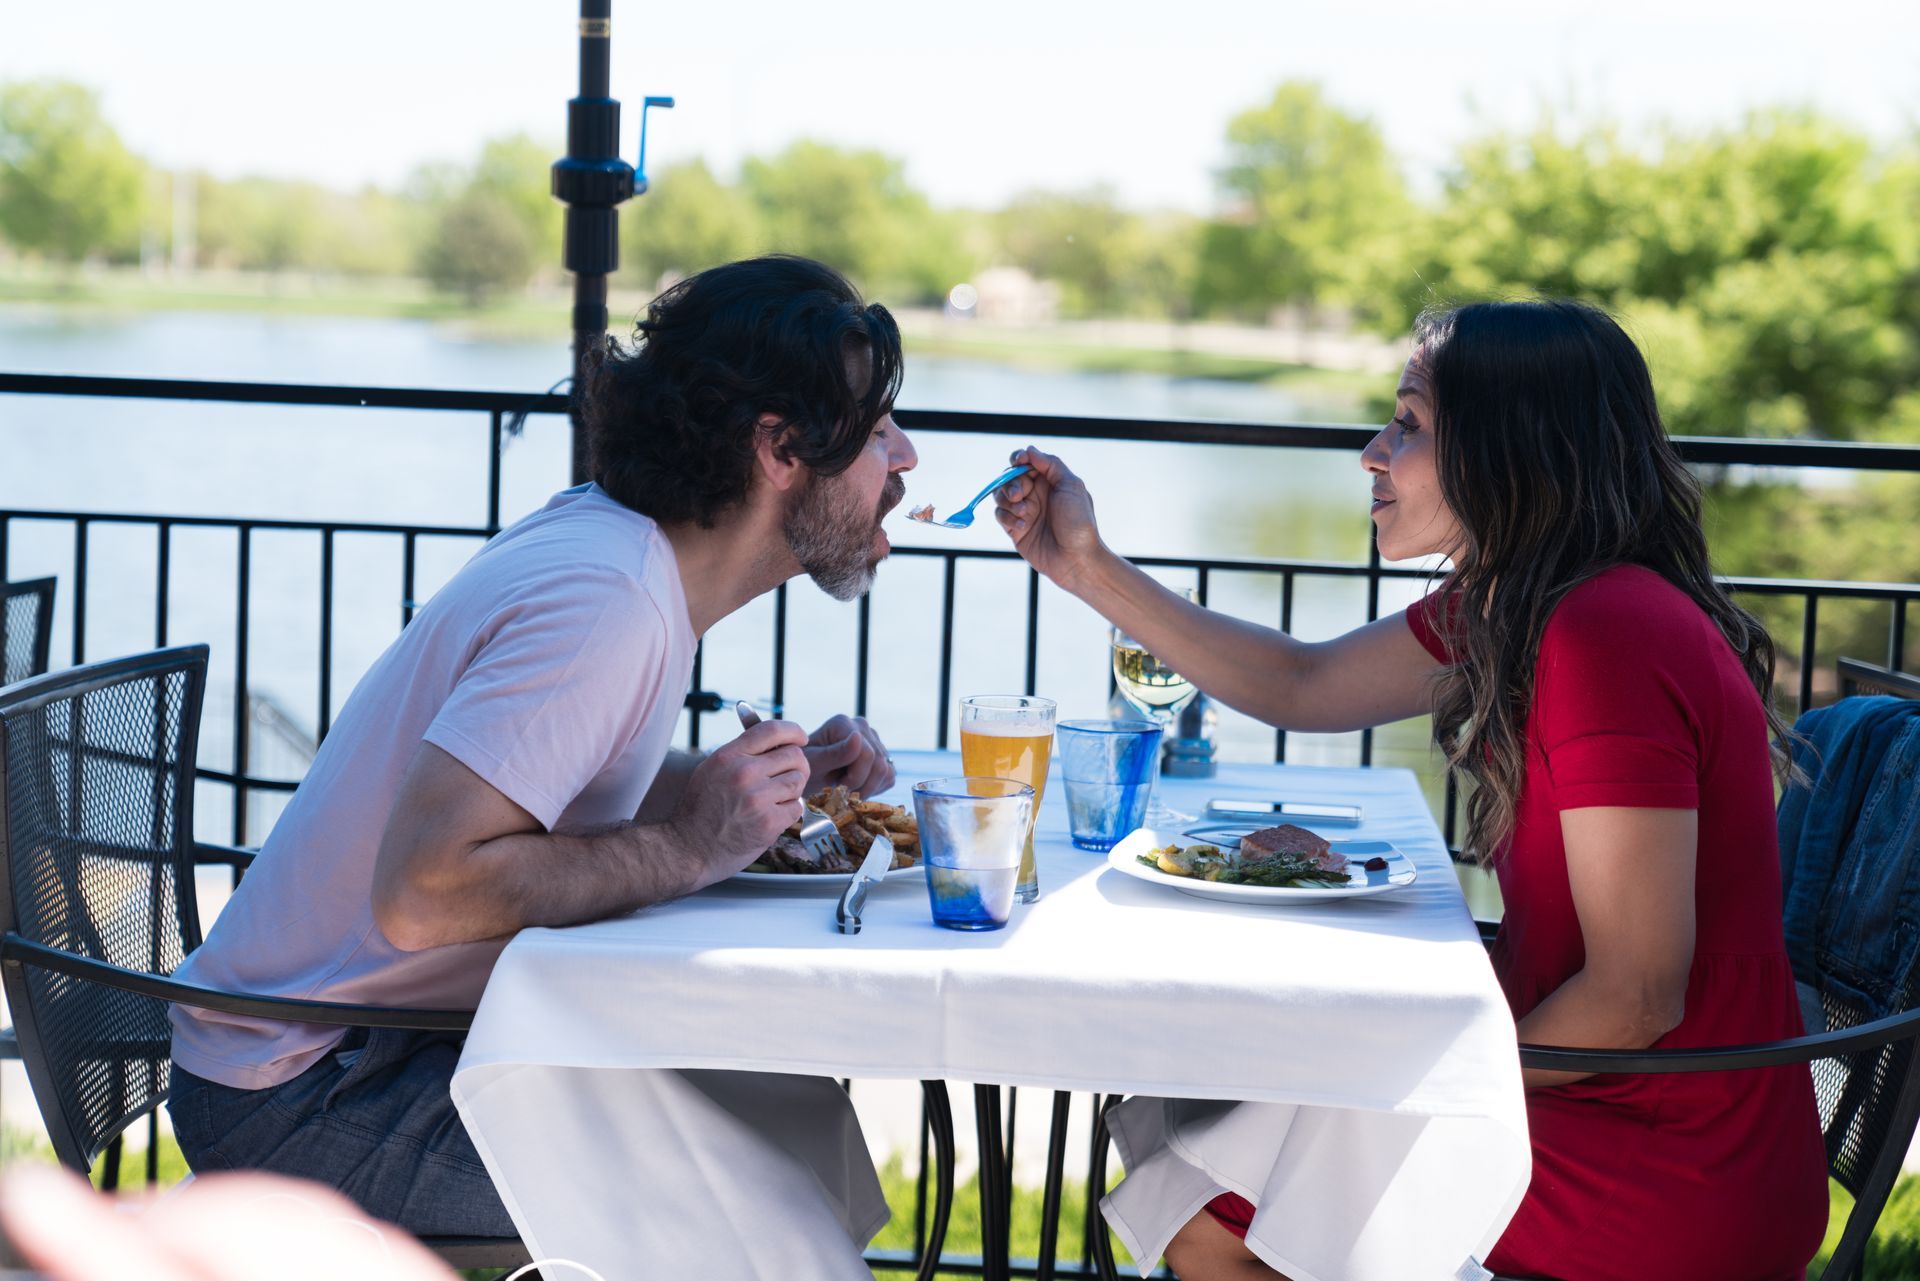 Couple at an outdoor dining spot, woman feeding man. 